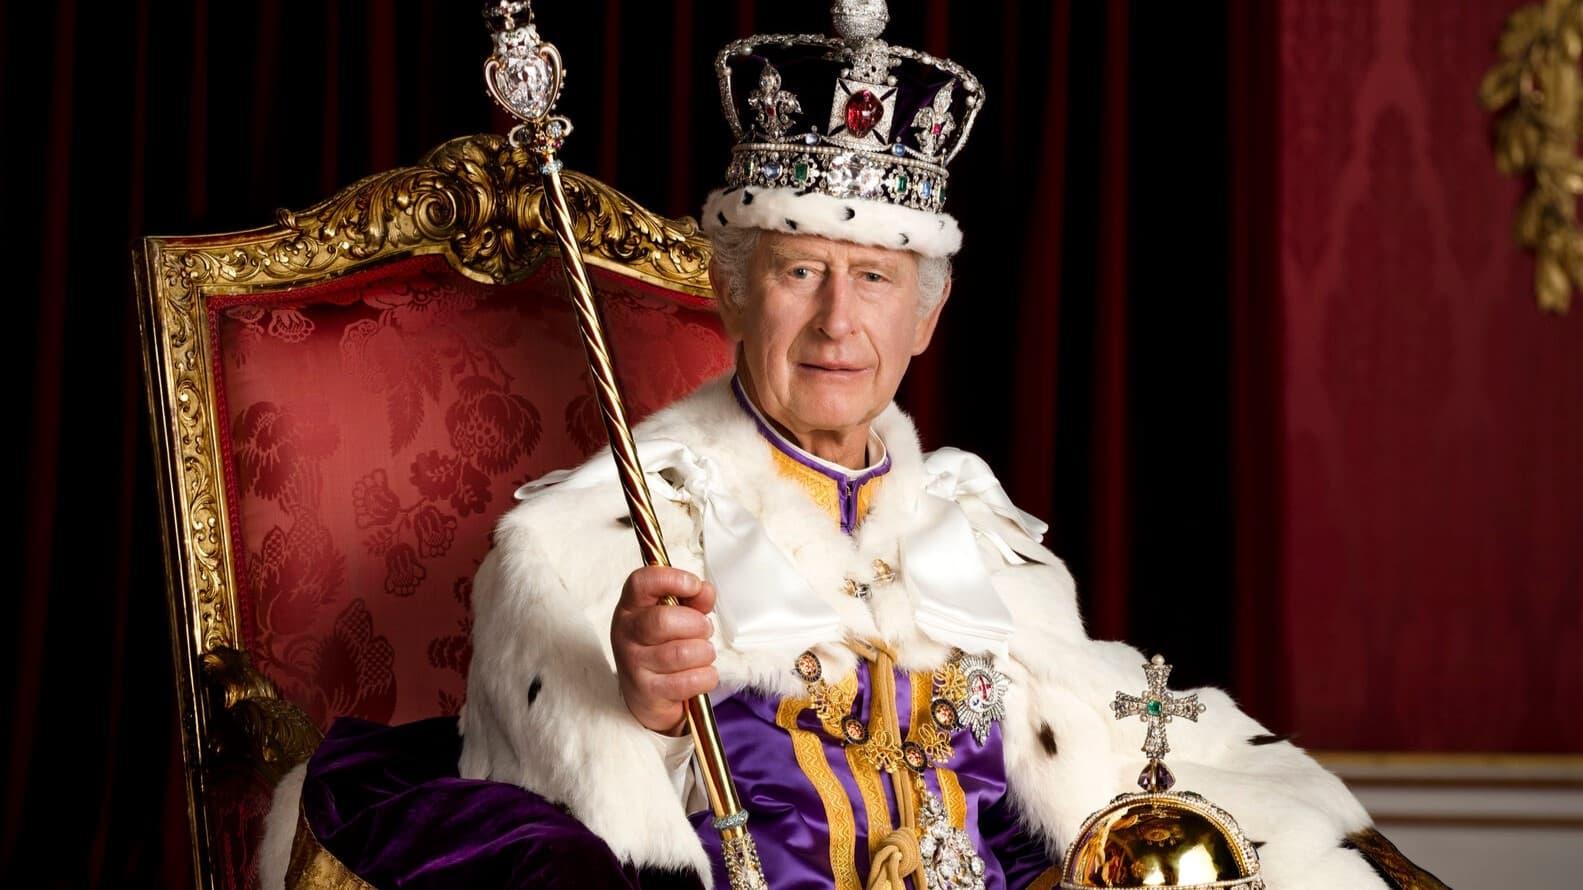 His Majesty King Charles III backdrop